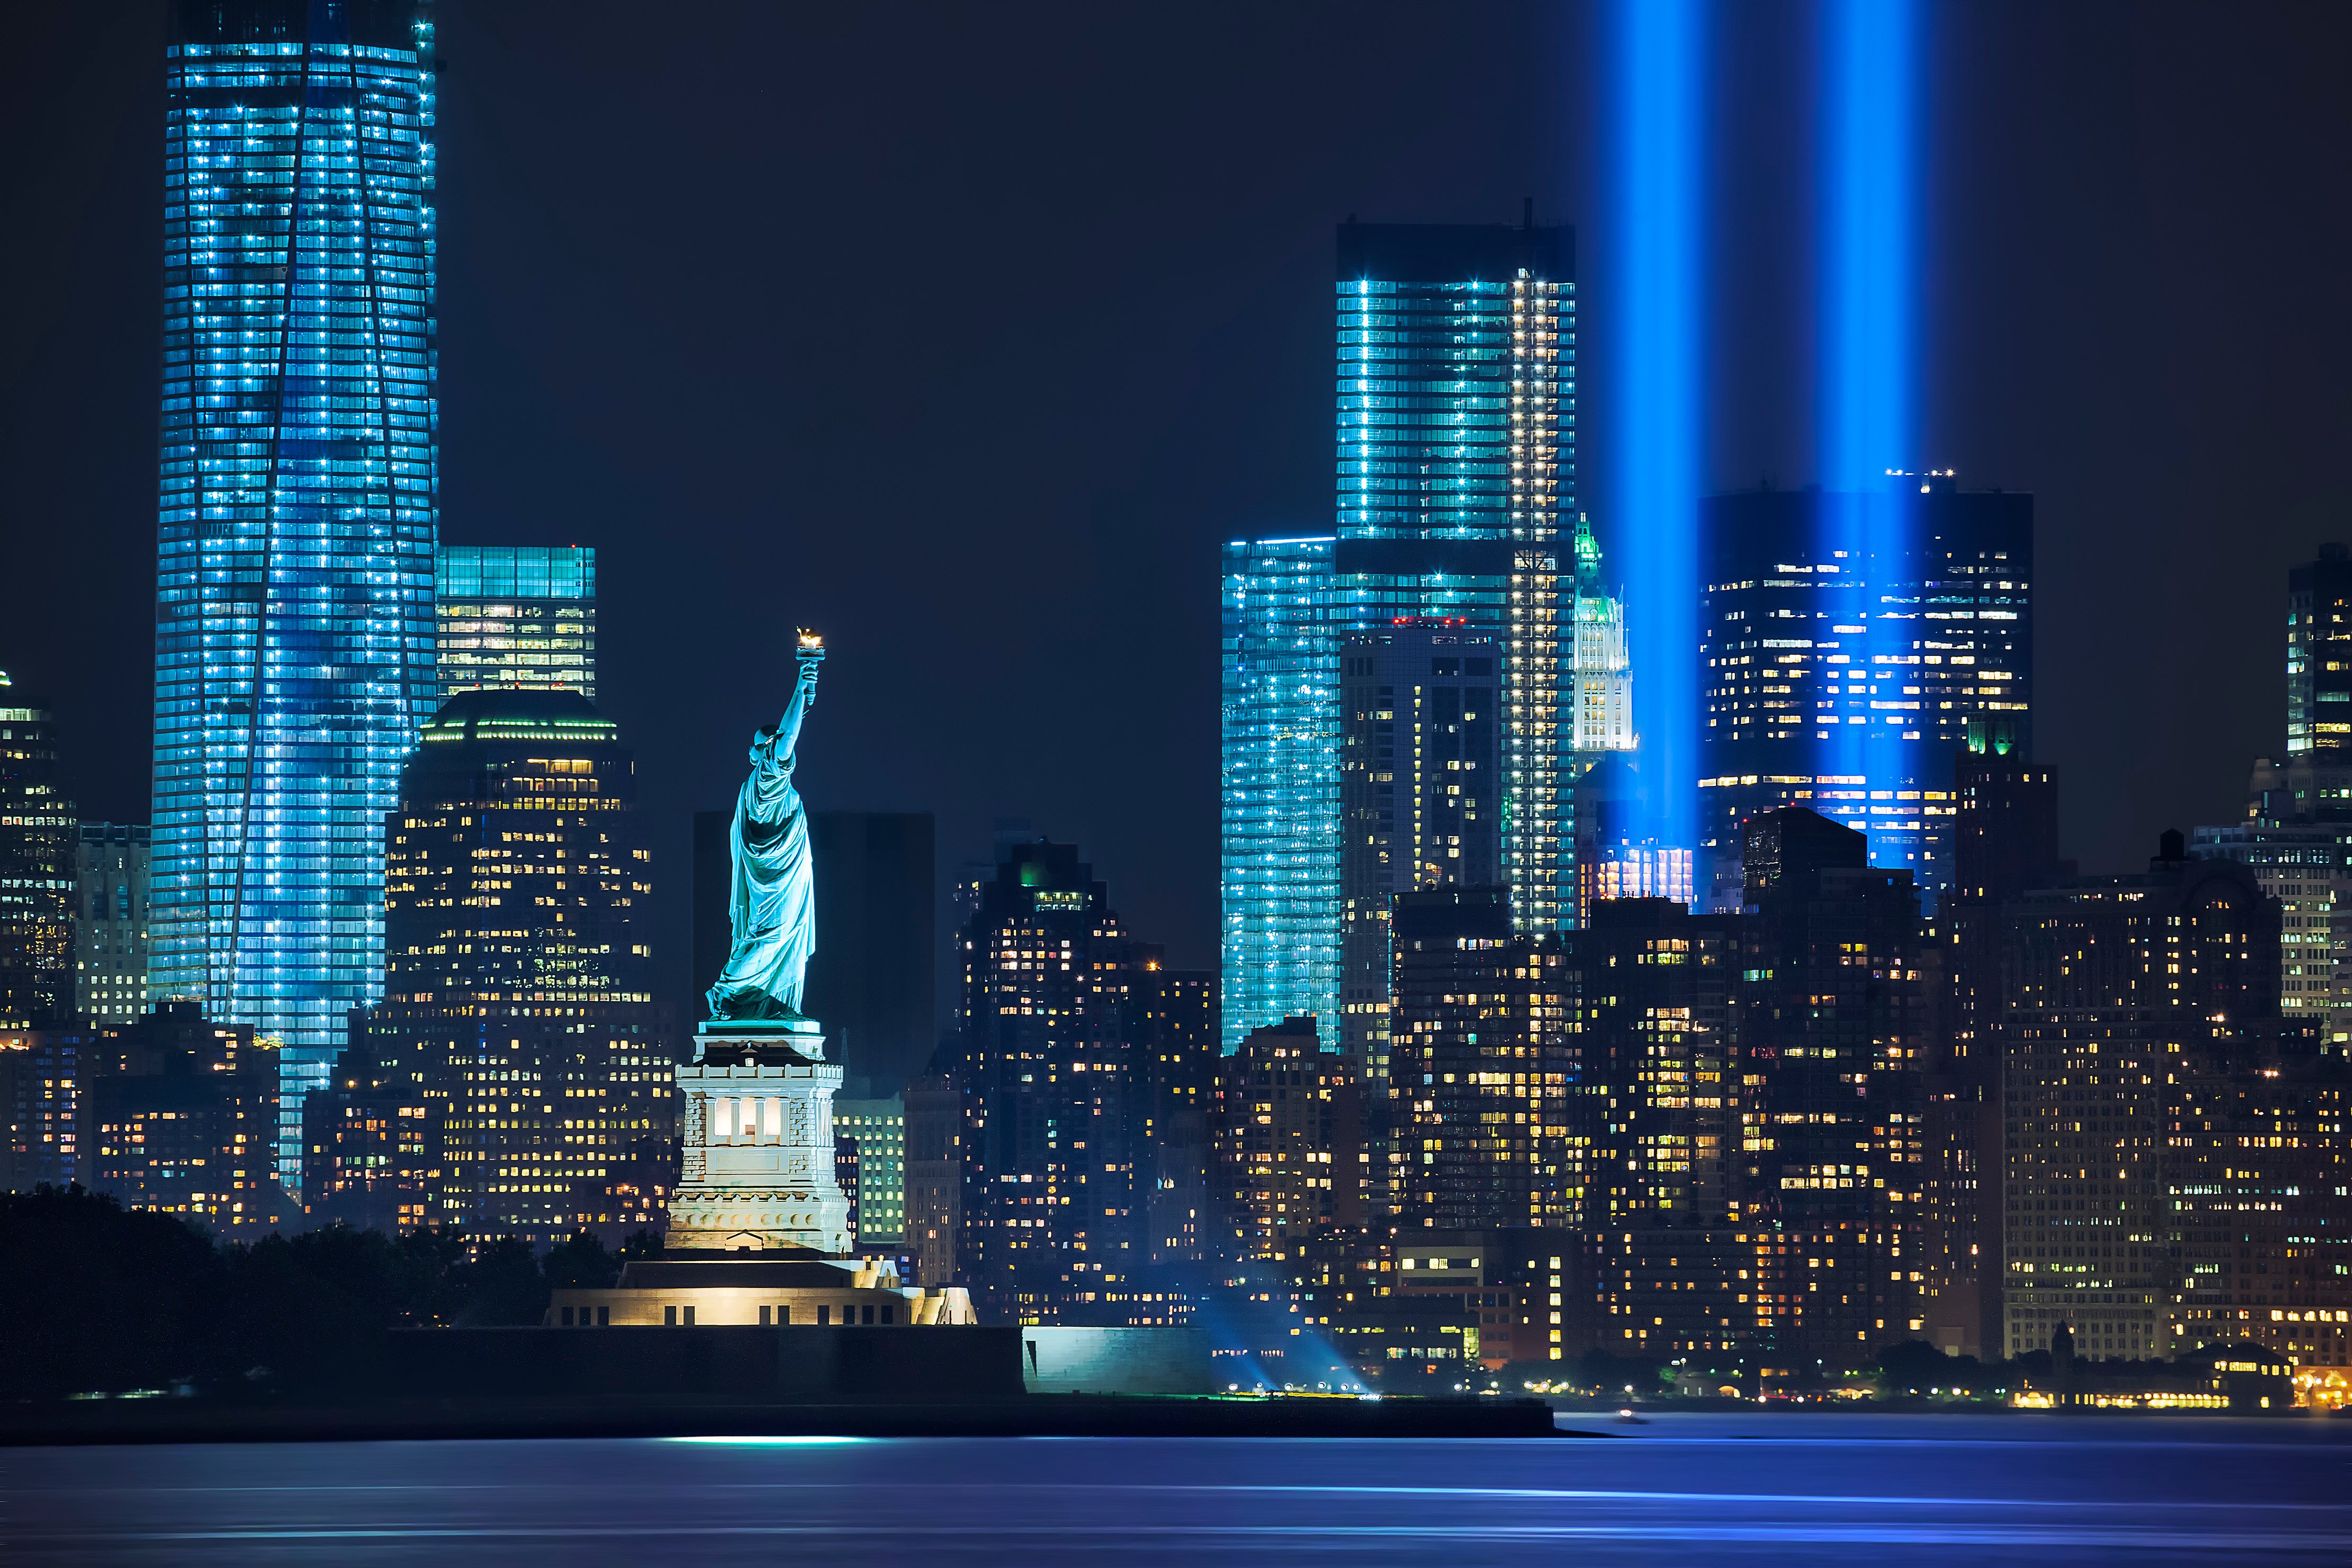 Se ilumina Nueva York en homenaje al atentado del 11-S